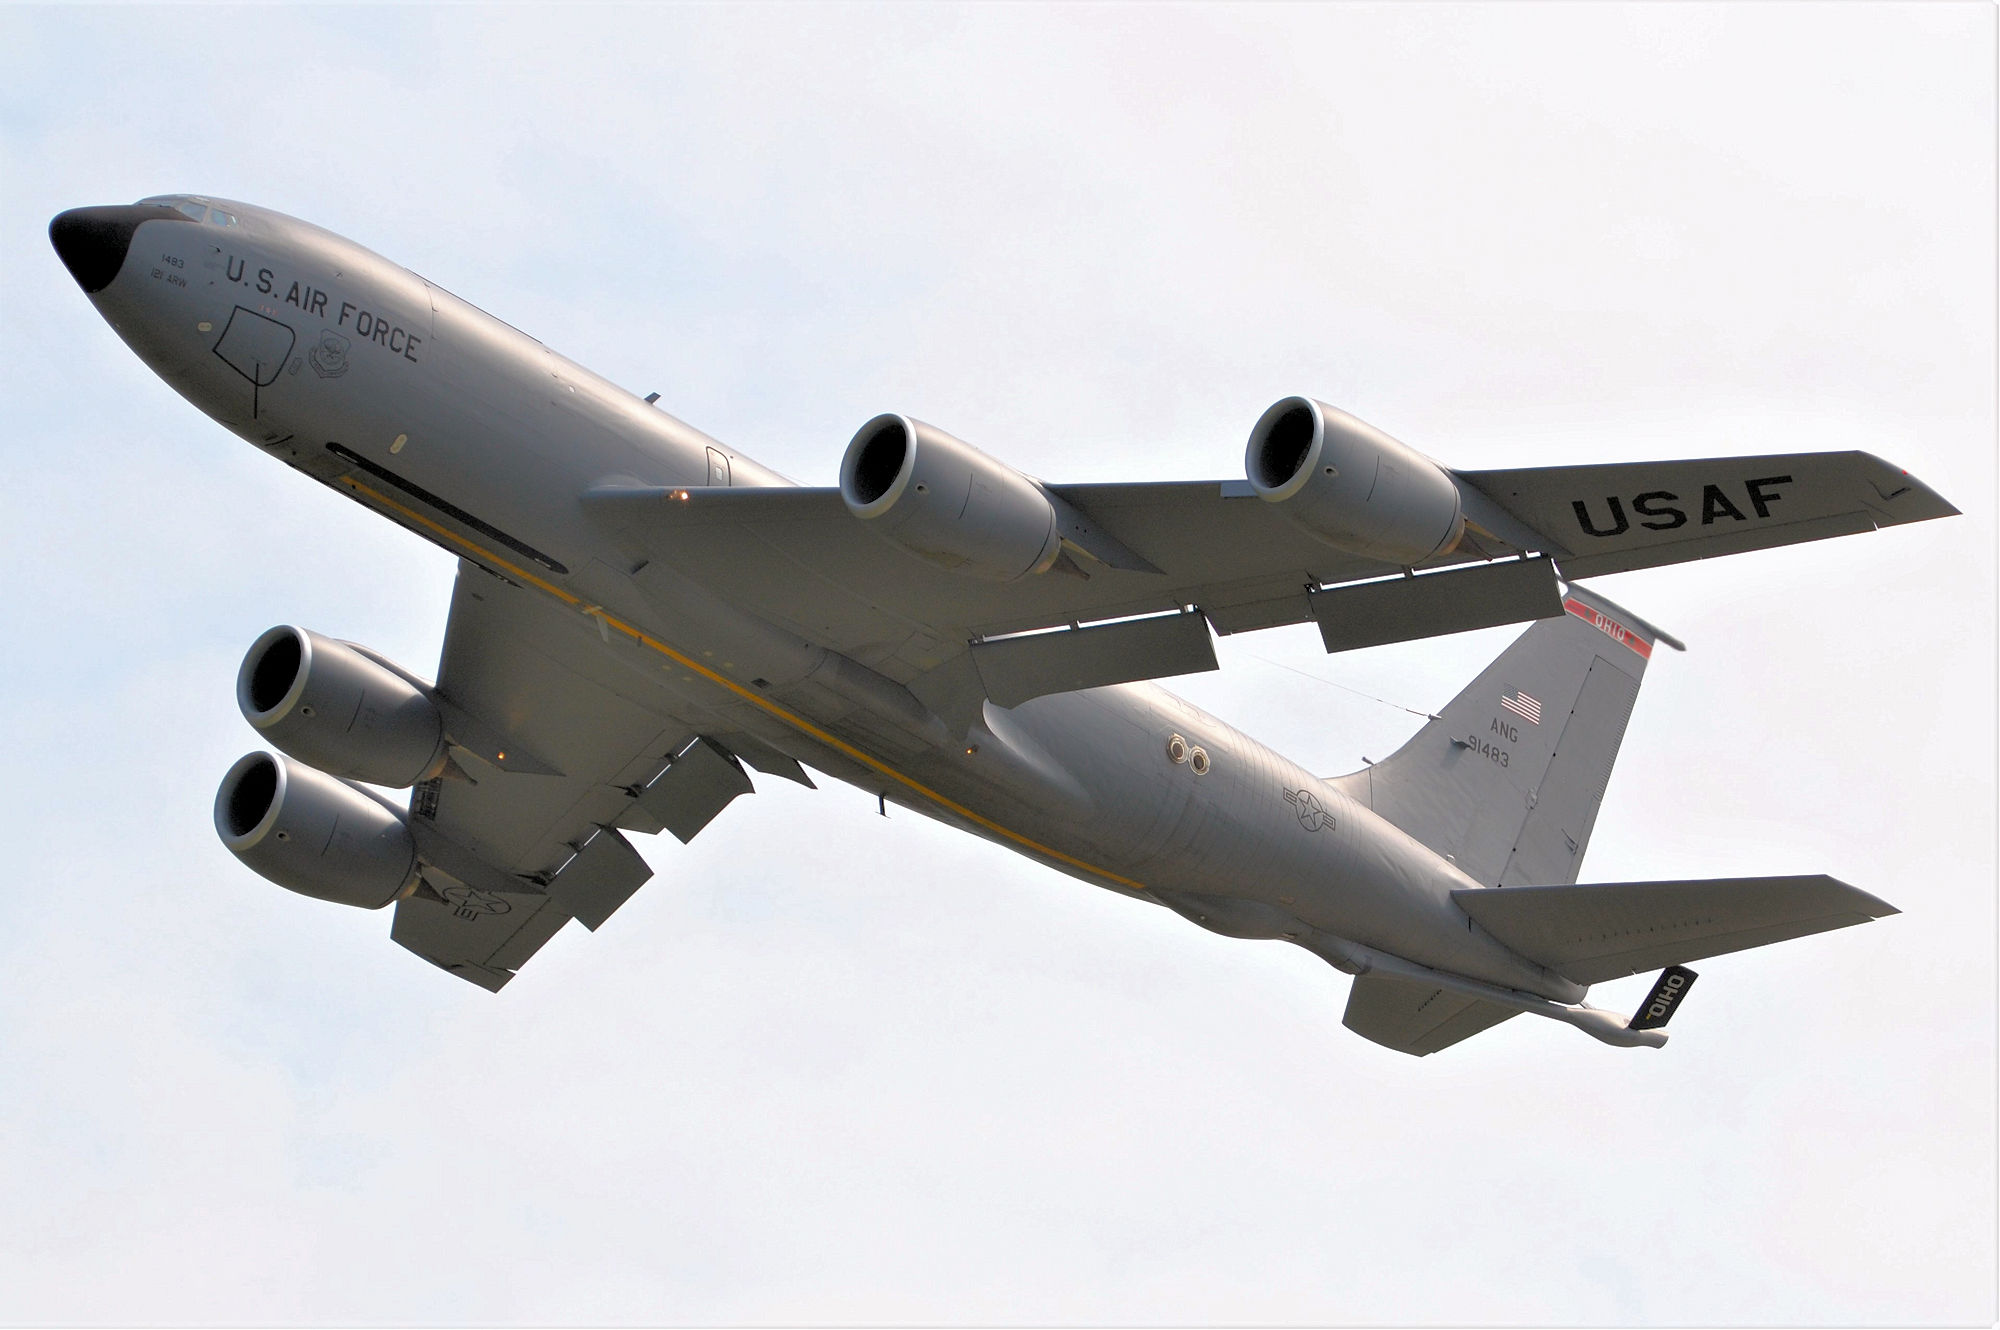 59-1483/591483 USAF - United States Air Force Boeing C-135 Stratotanker Airframe Information - AVSpotters.com